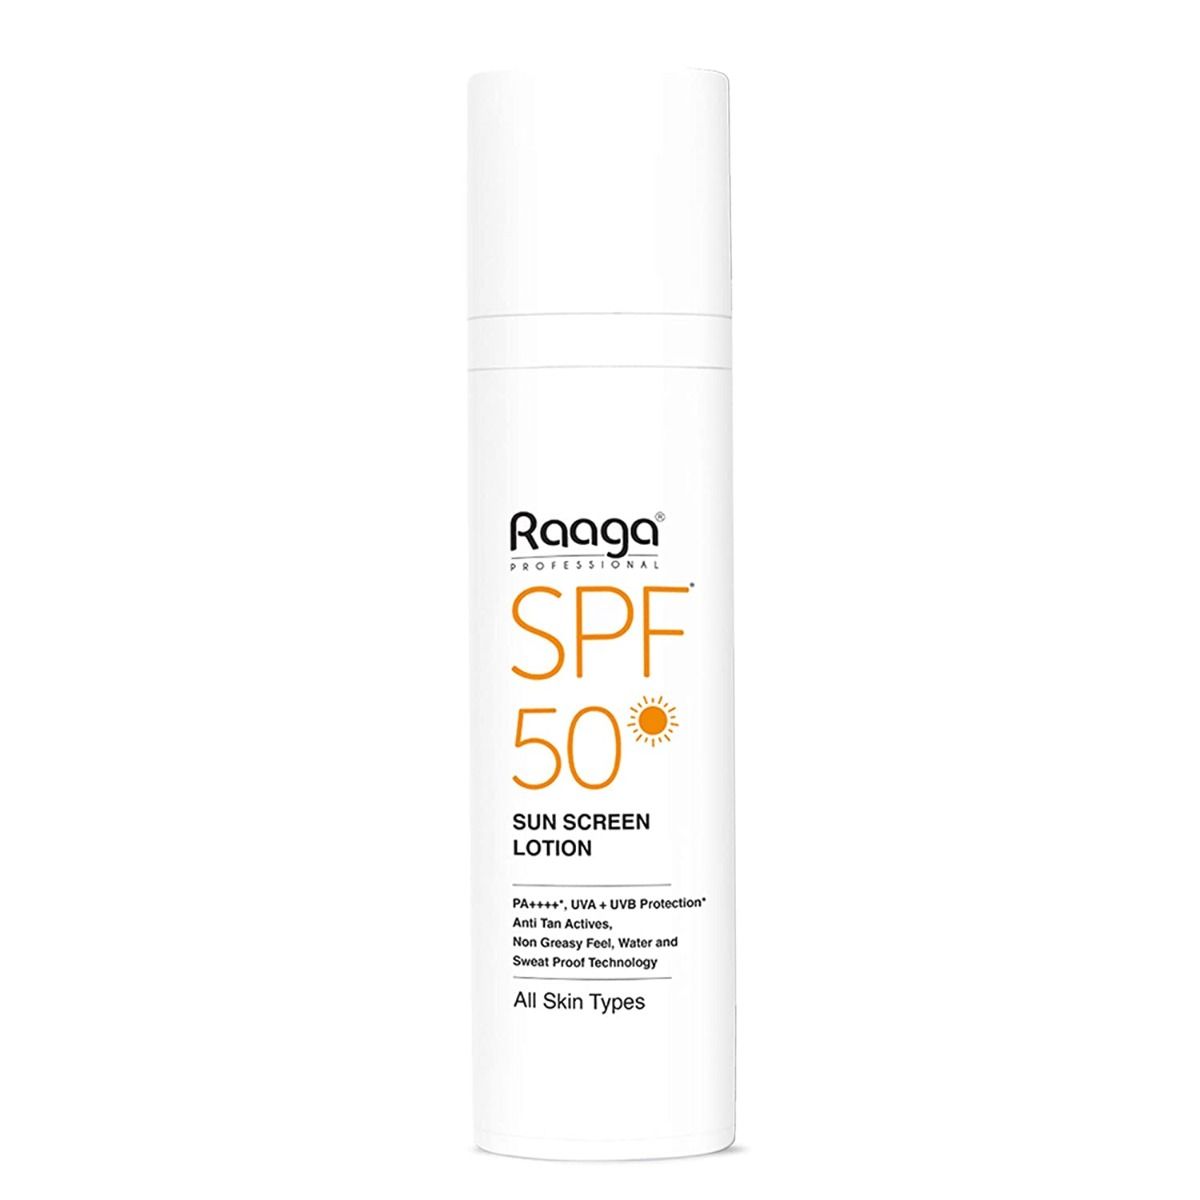 Raaga Professional Spf 50 Sunscreen Lotion (80ml) - Niram